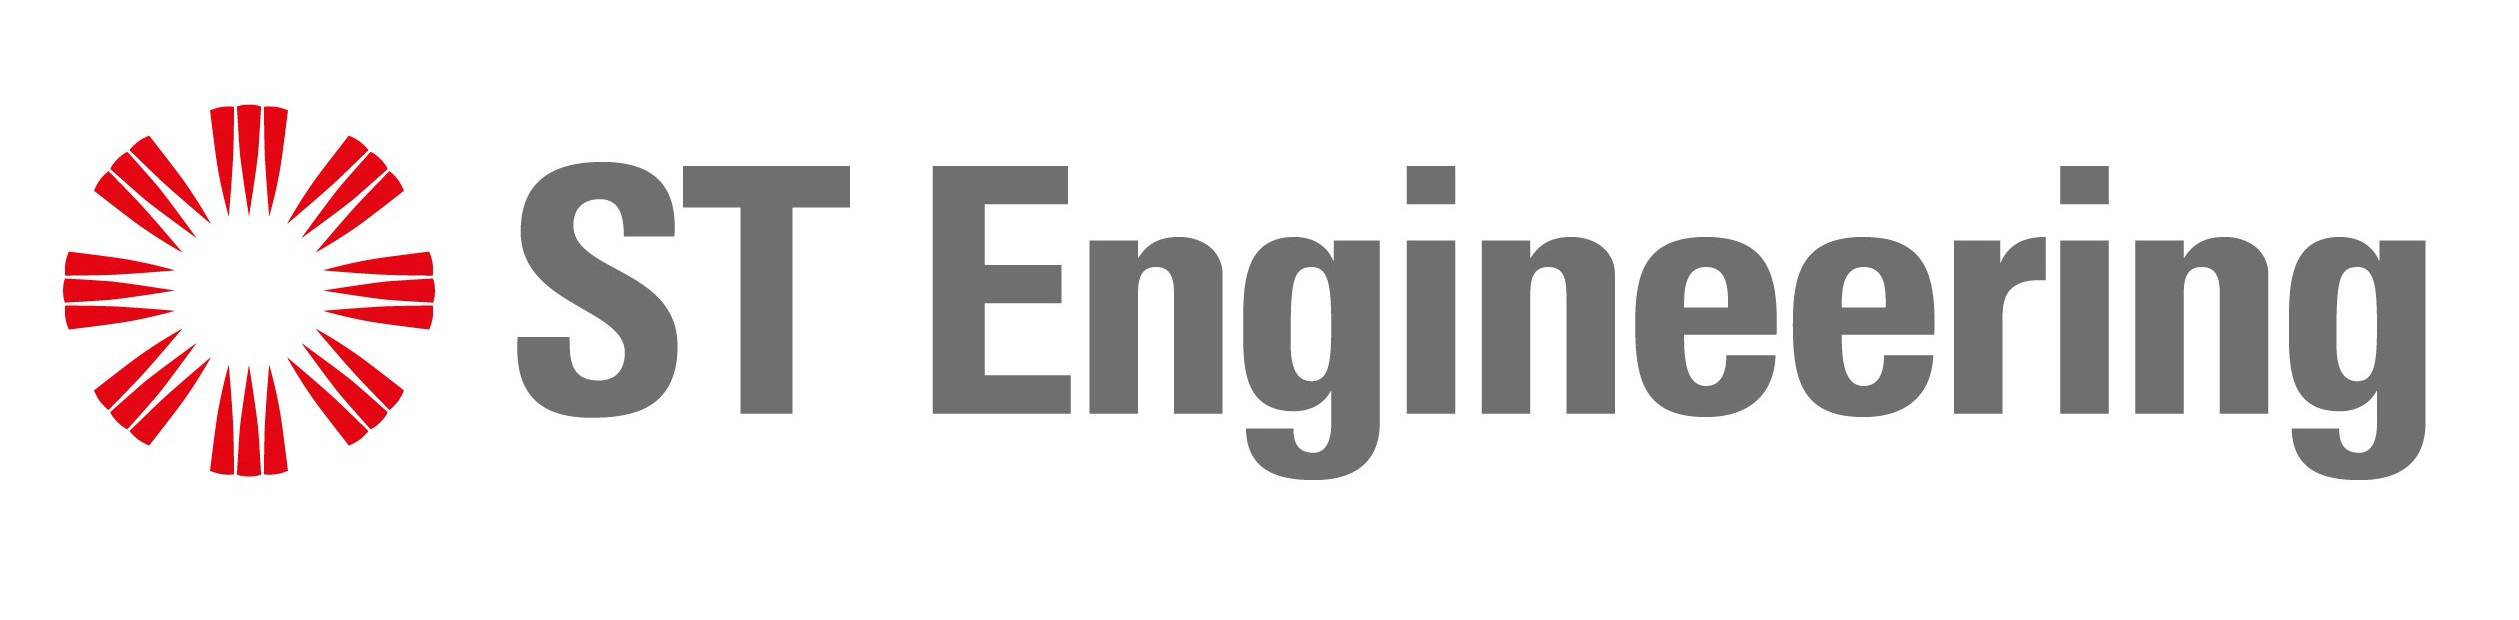 Company logo for St Engineering Marine Ltd.